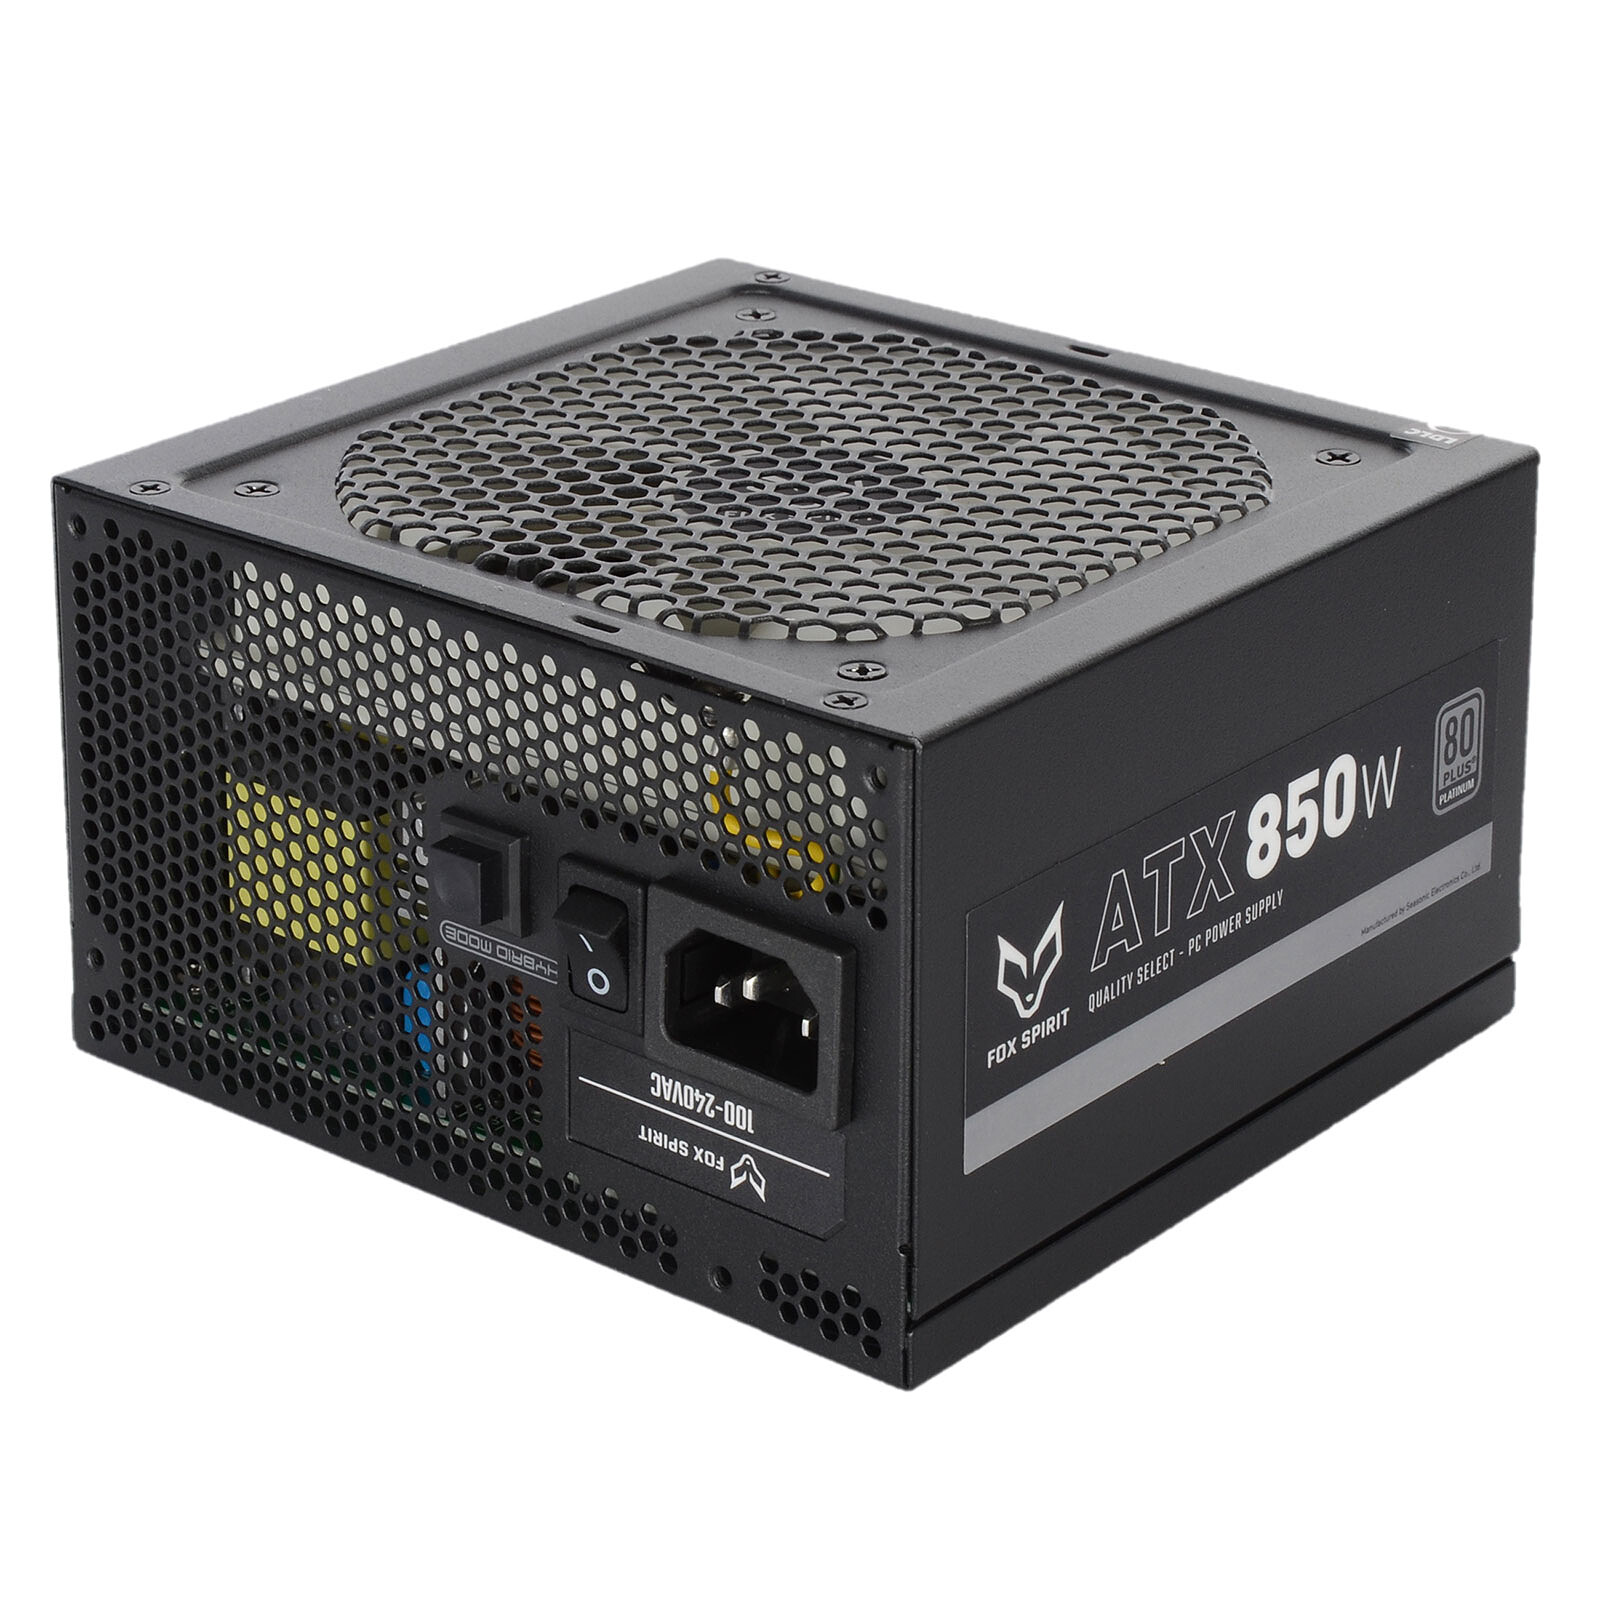 Fox Spirit GT-850P V2 80PLUS Platinum - PC power supply - LDLC 3